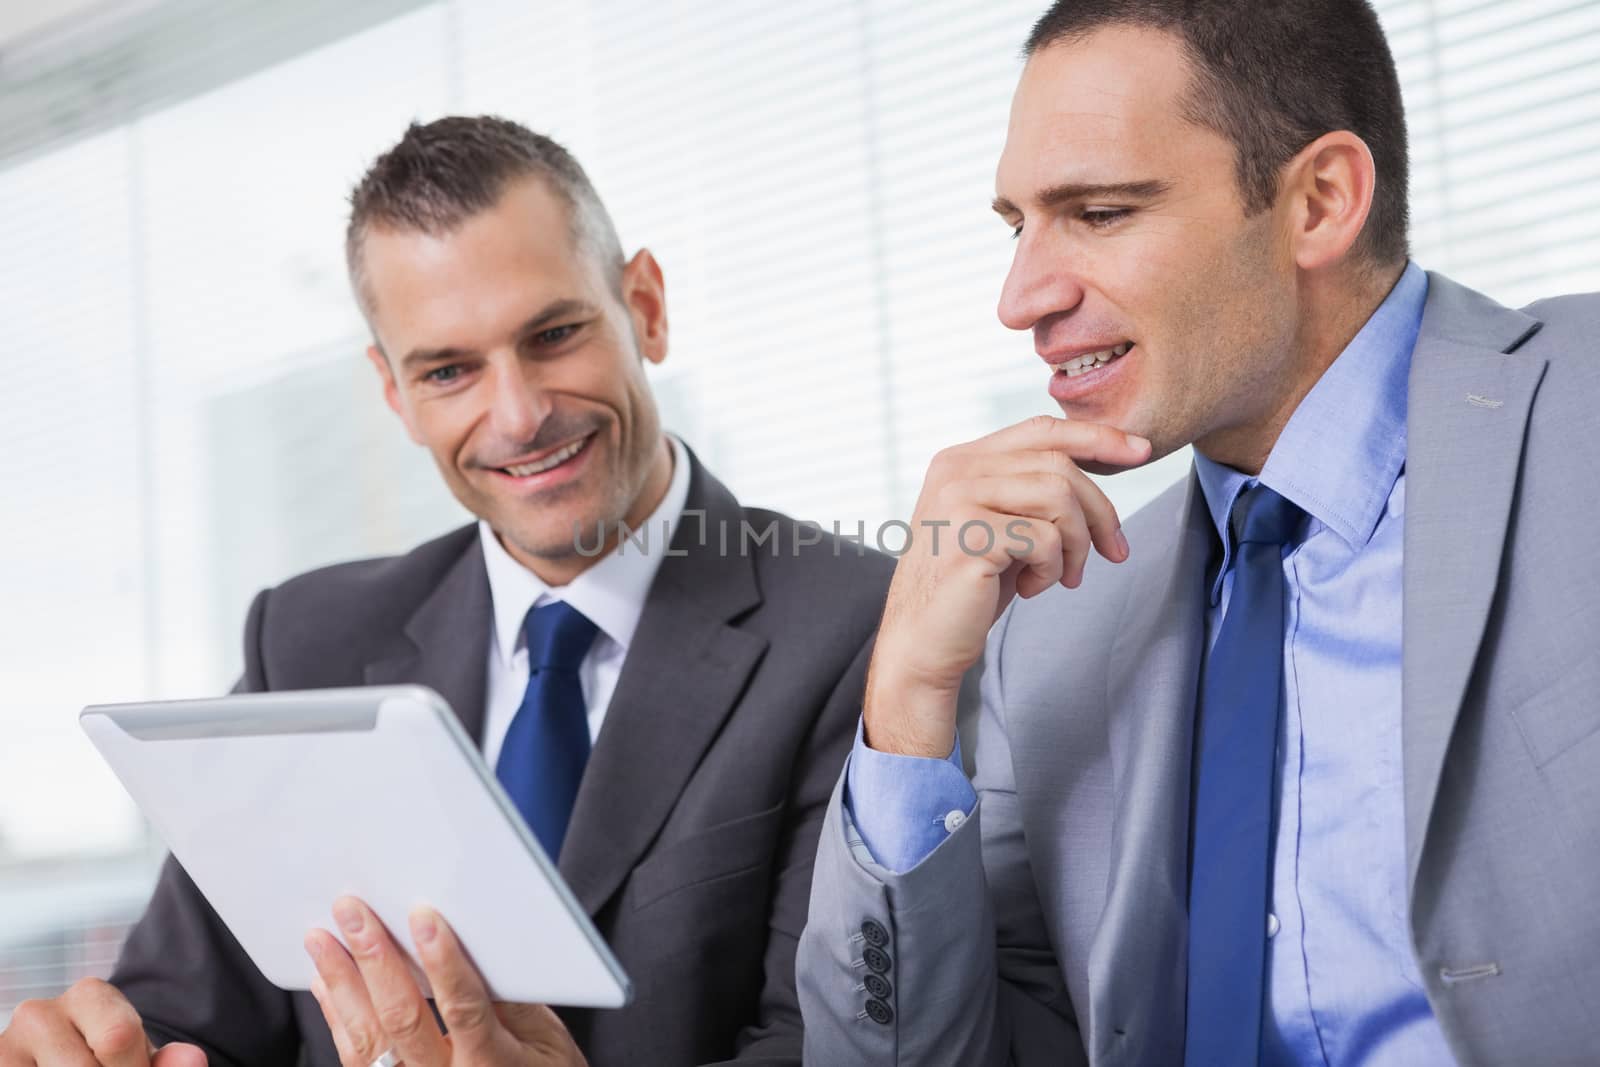 Smiling businessmen working together on their tablet by Wavebreakmedia